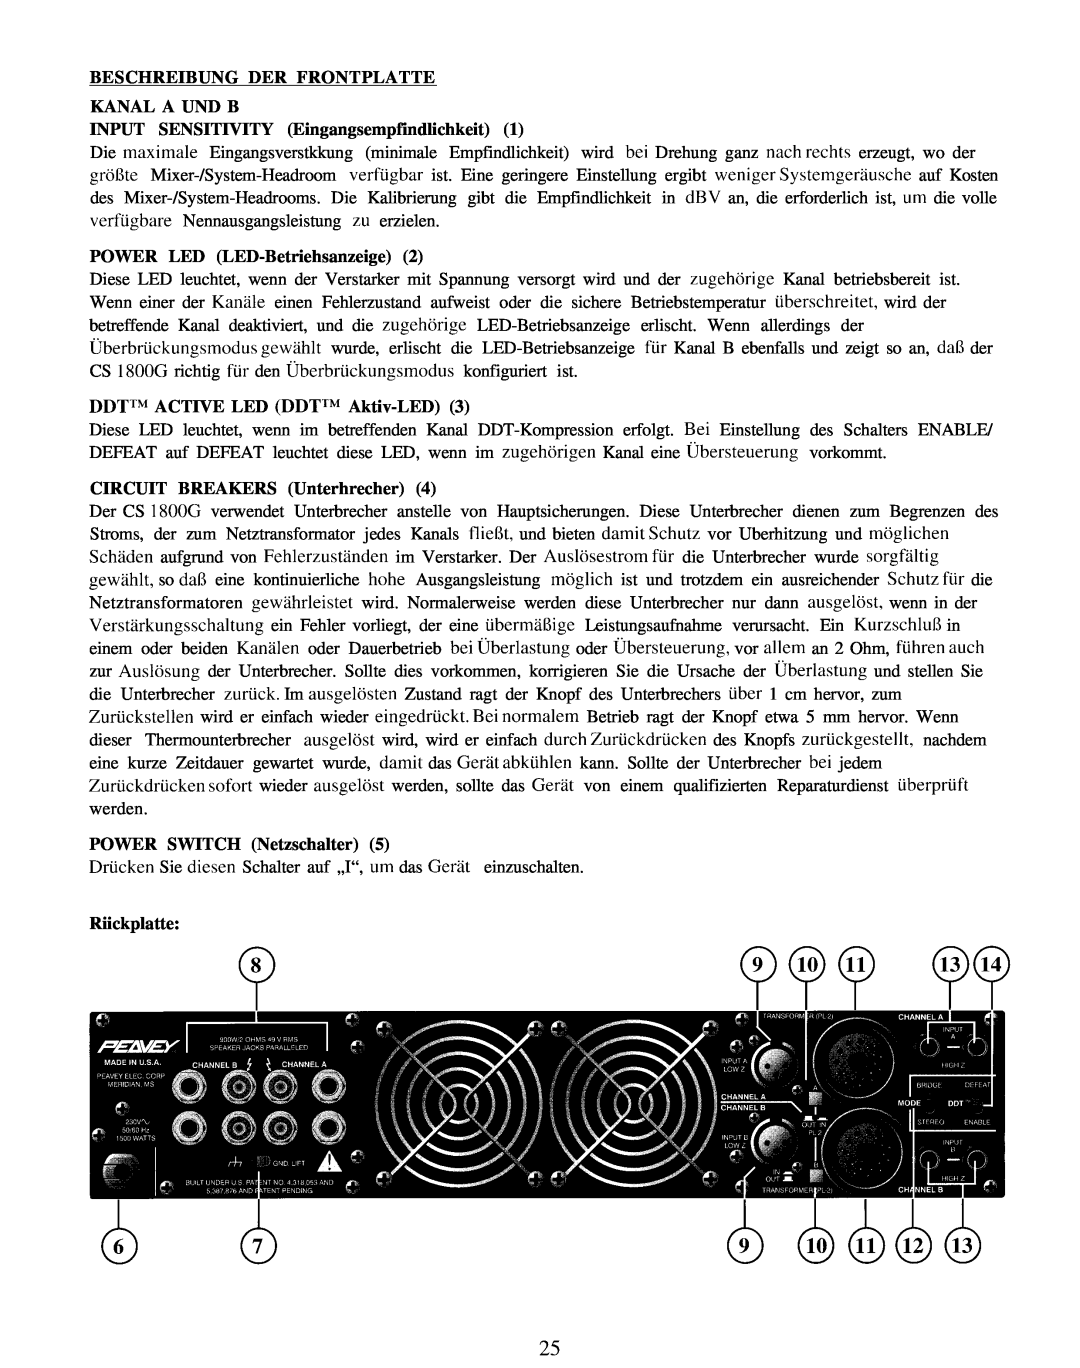 Peavey CS 1800G manual Beschreibung Der Frontplatte Kanal A Und B, INPUT SENSITIVITY Eingangsempfindlichkeit, Riickplatte 